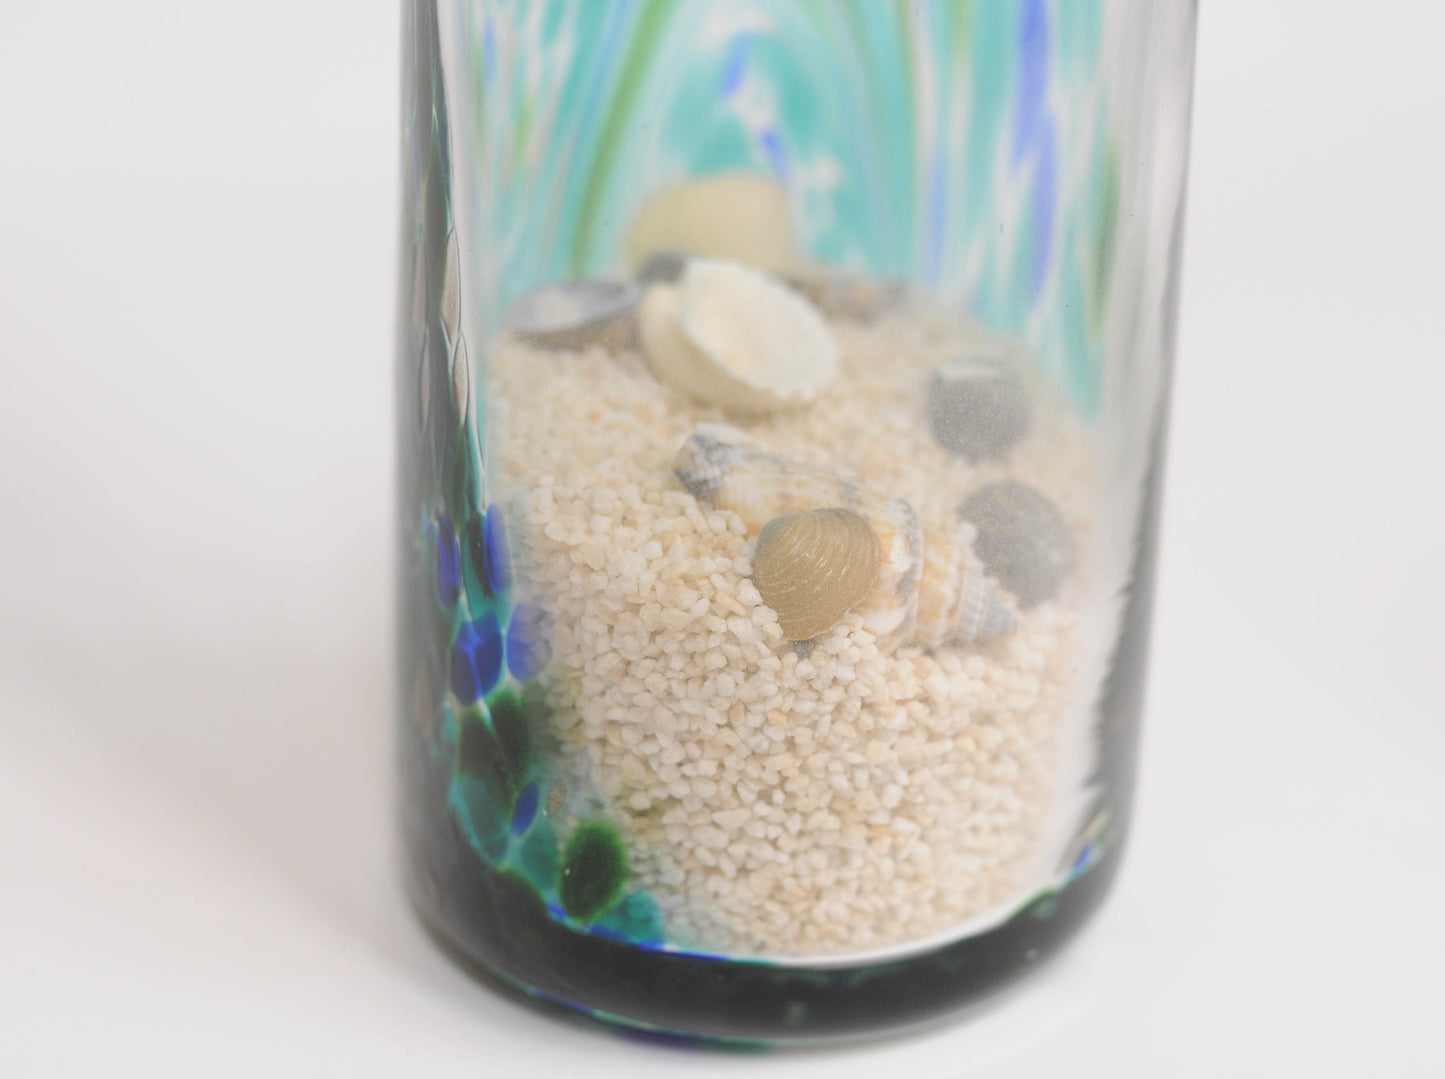 Swirled Glass Jars with Sand and Seashells